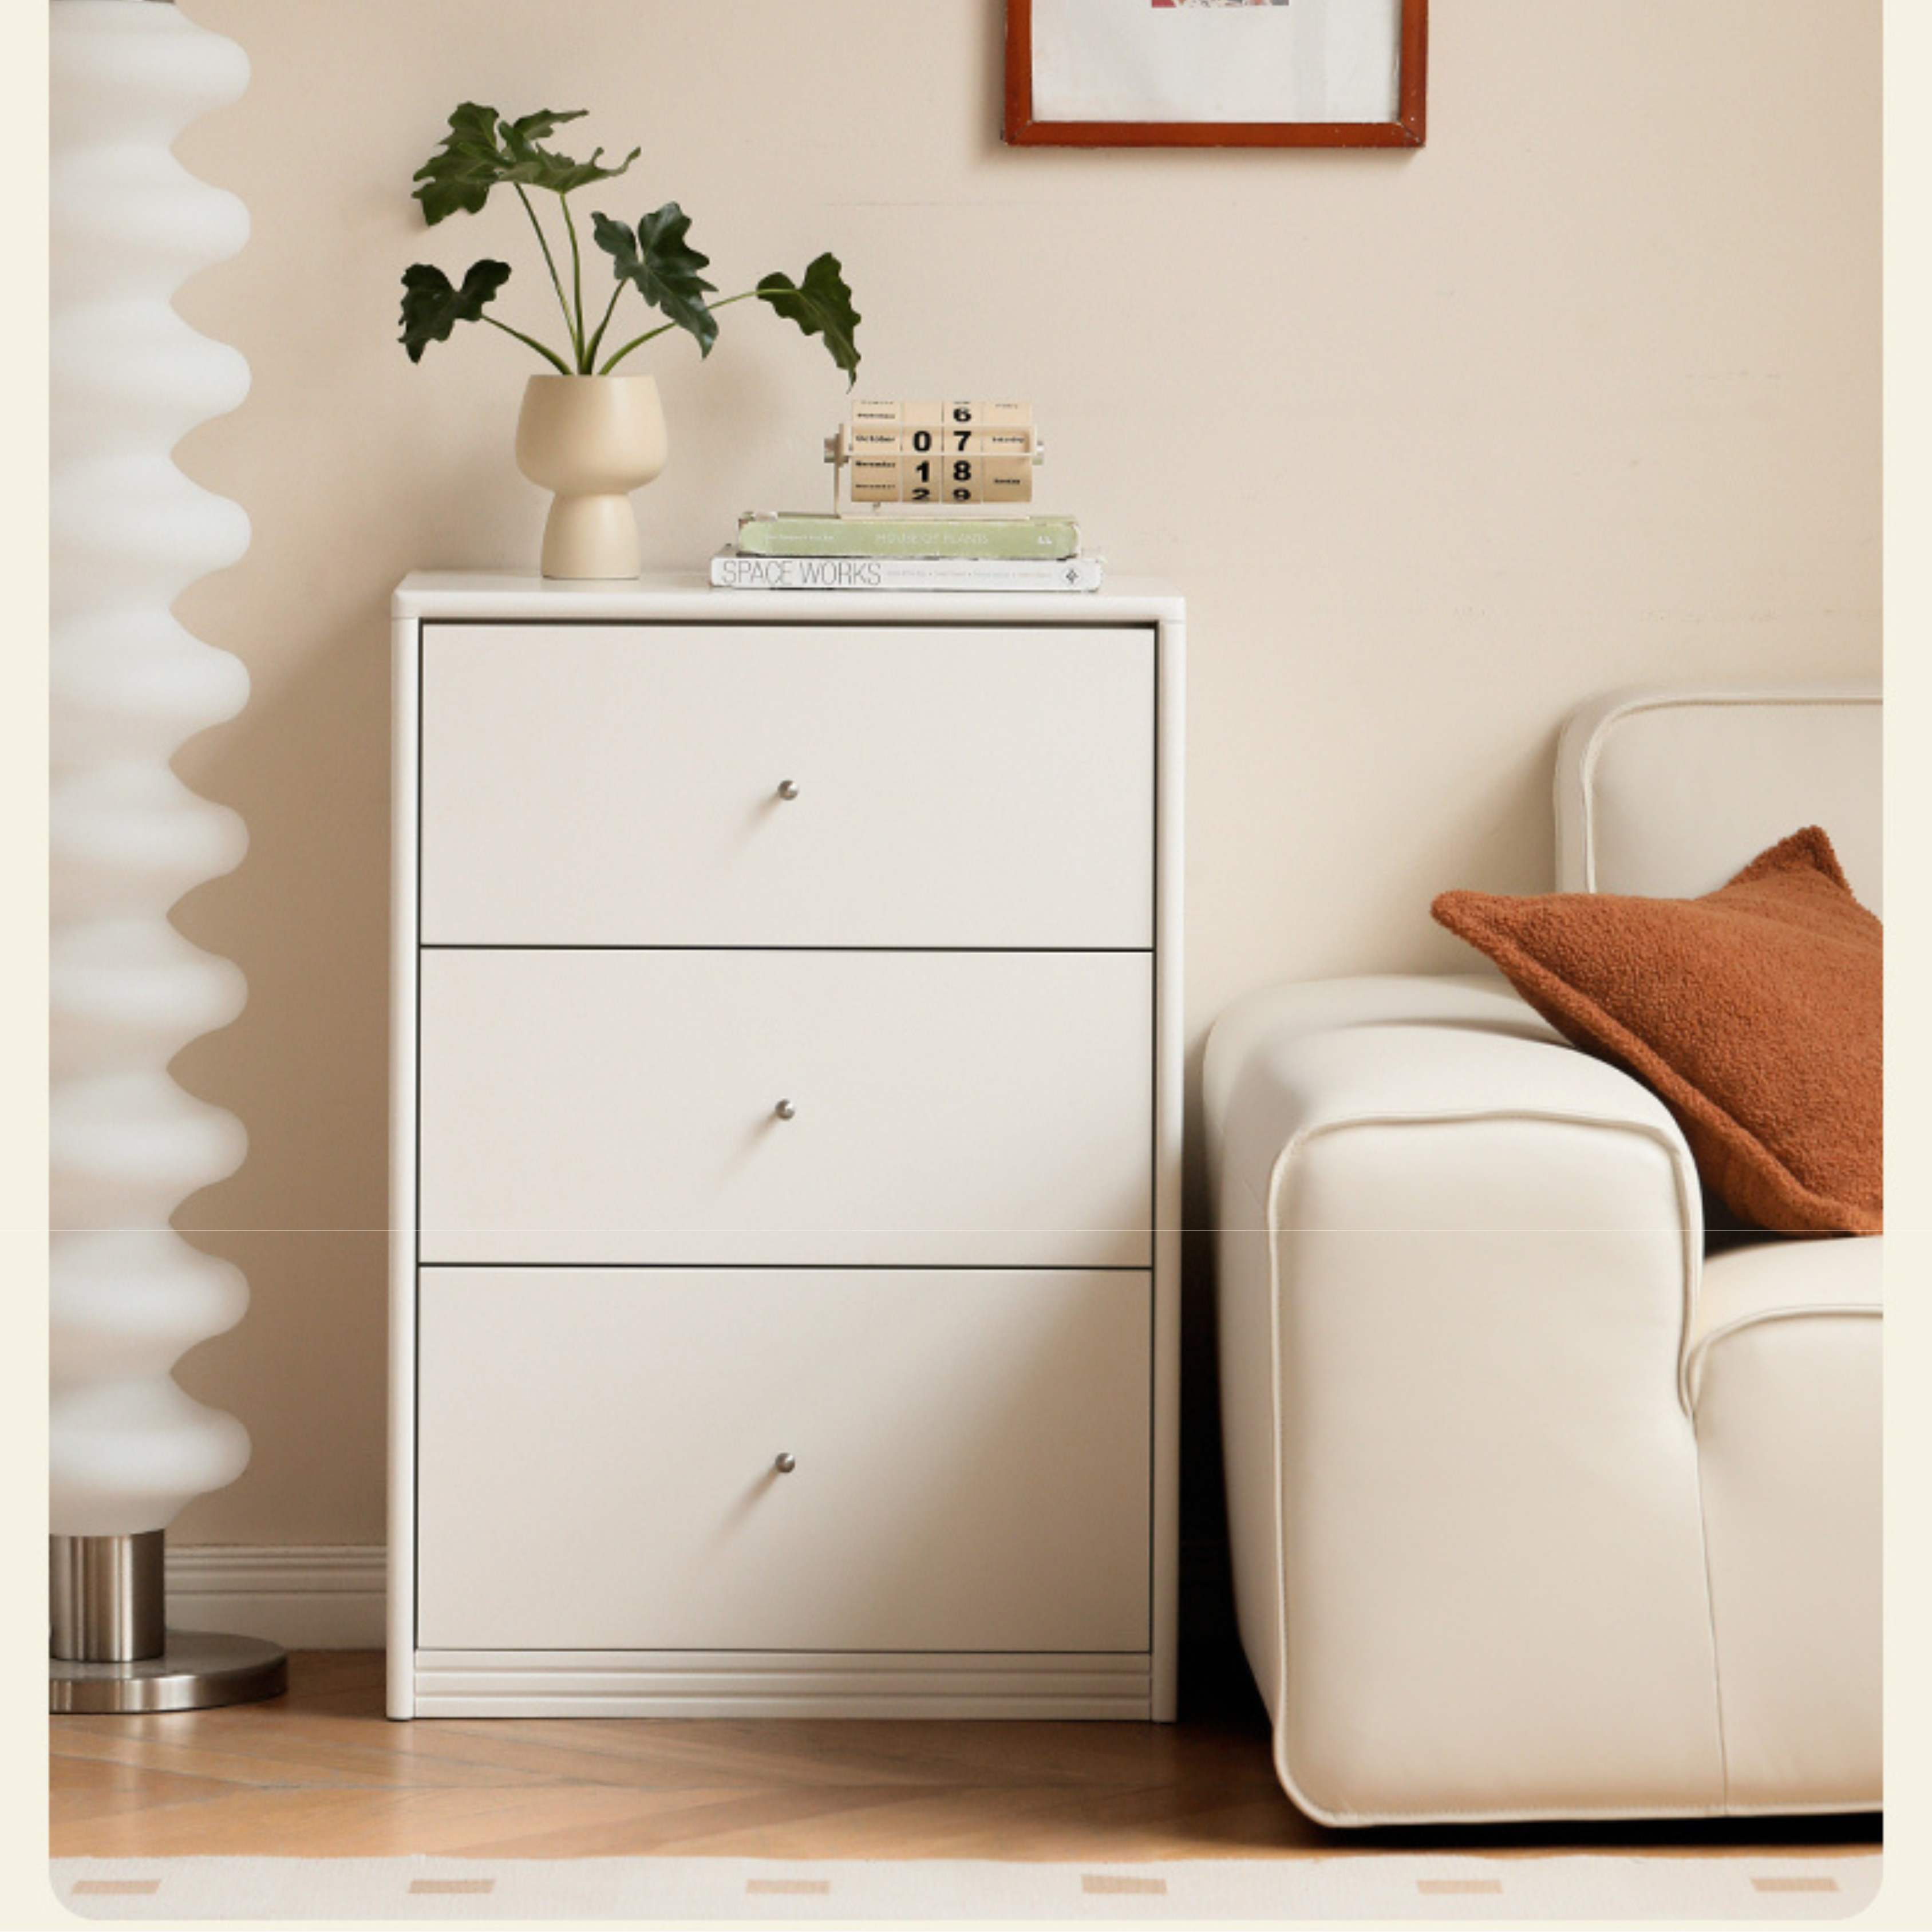 Poplar Solid Wooden Bookcase Cream White Free Combination Glass Door Display Cabinet "-